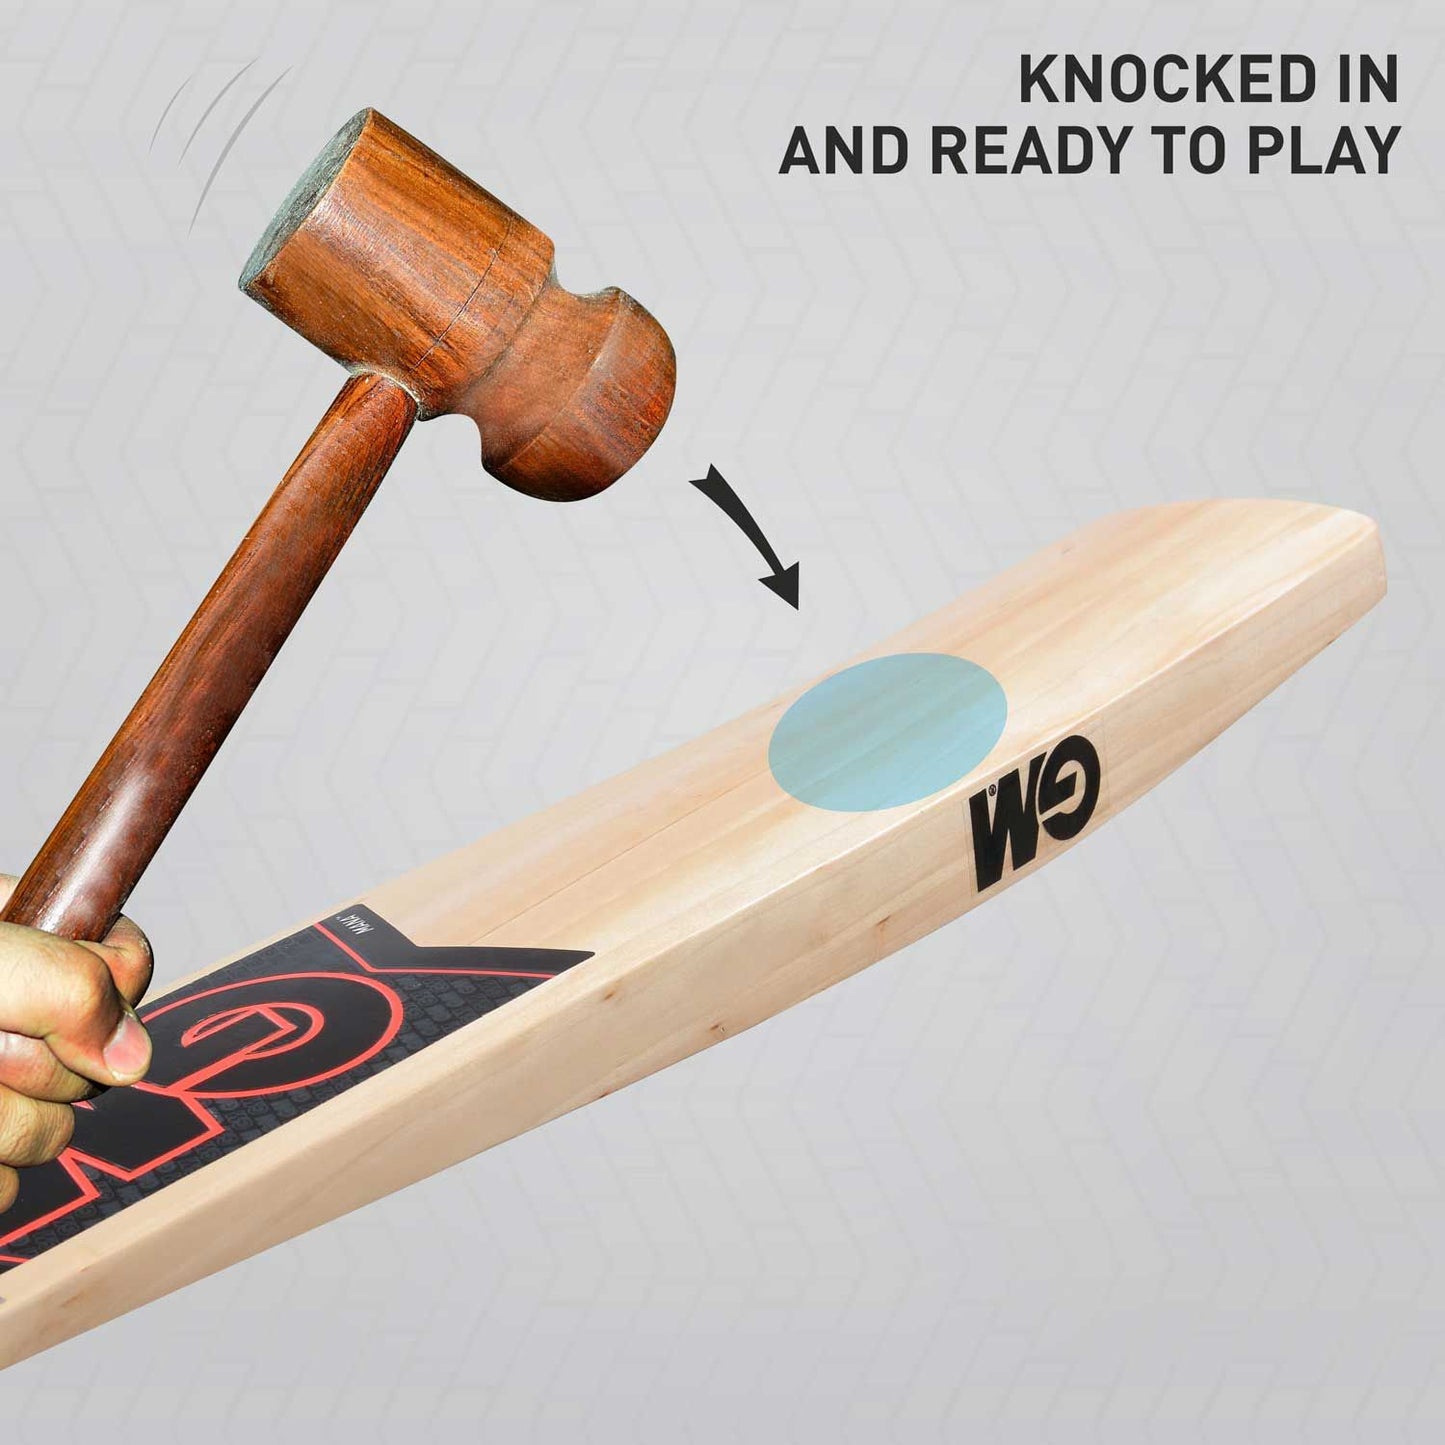 GM Mana Maestro Kashmir Willow Cricket Bat - Best Price online Prokicksports.com